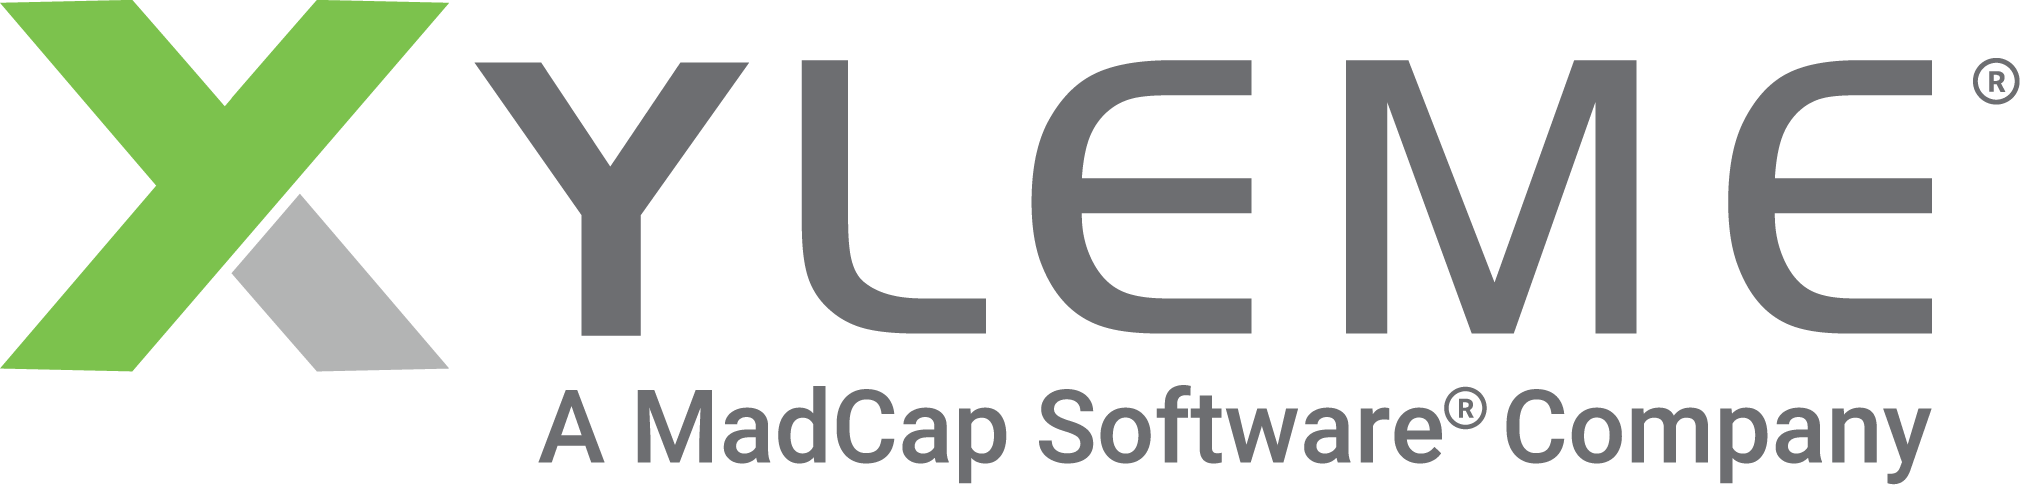 MadCapXyleme-interim-logo-2x